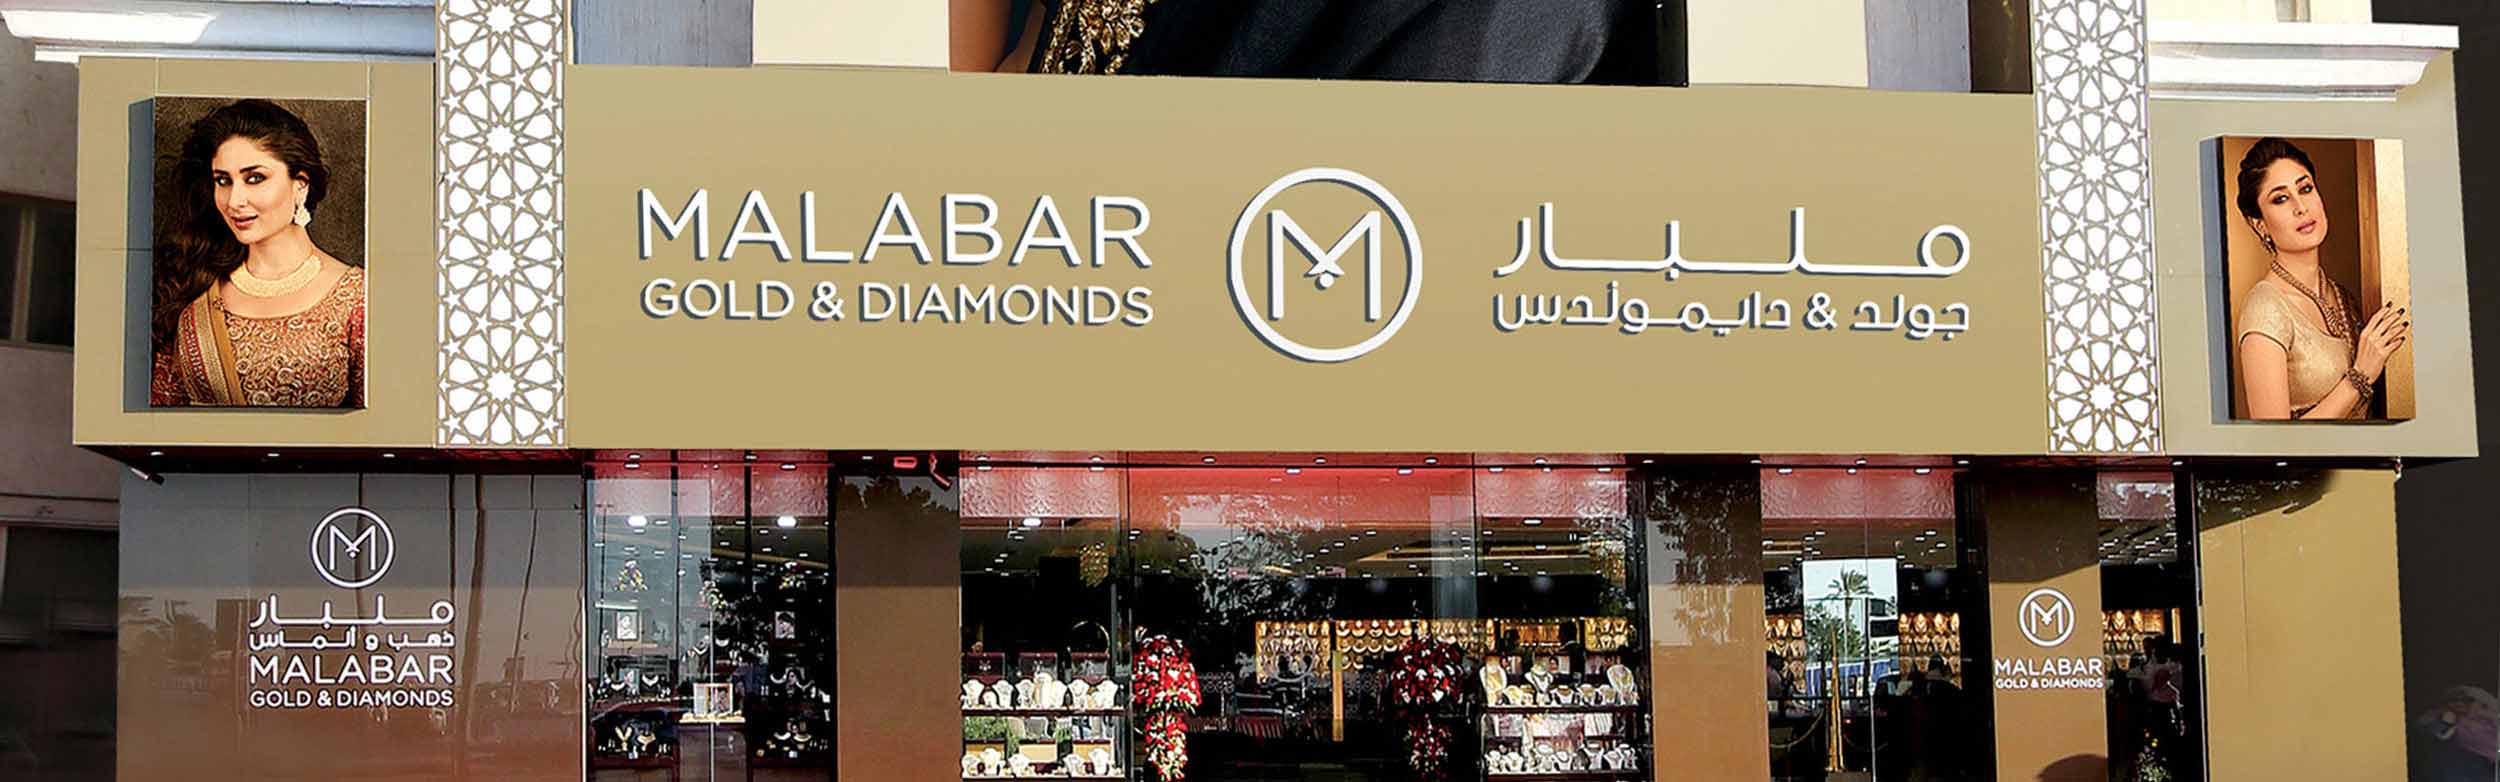 Malabar Gold & Diamonds Stores in Gold Souq II, Dubai